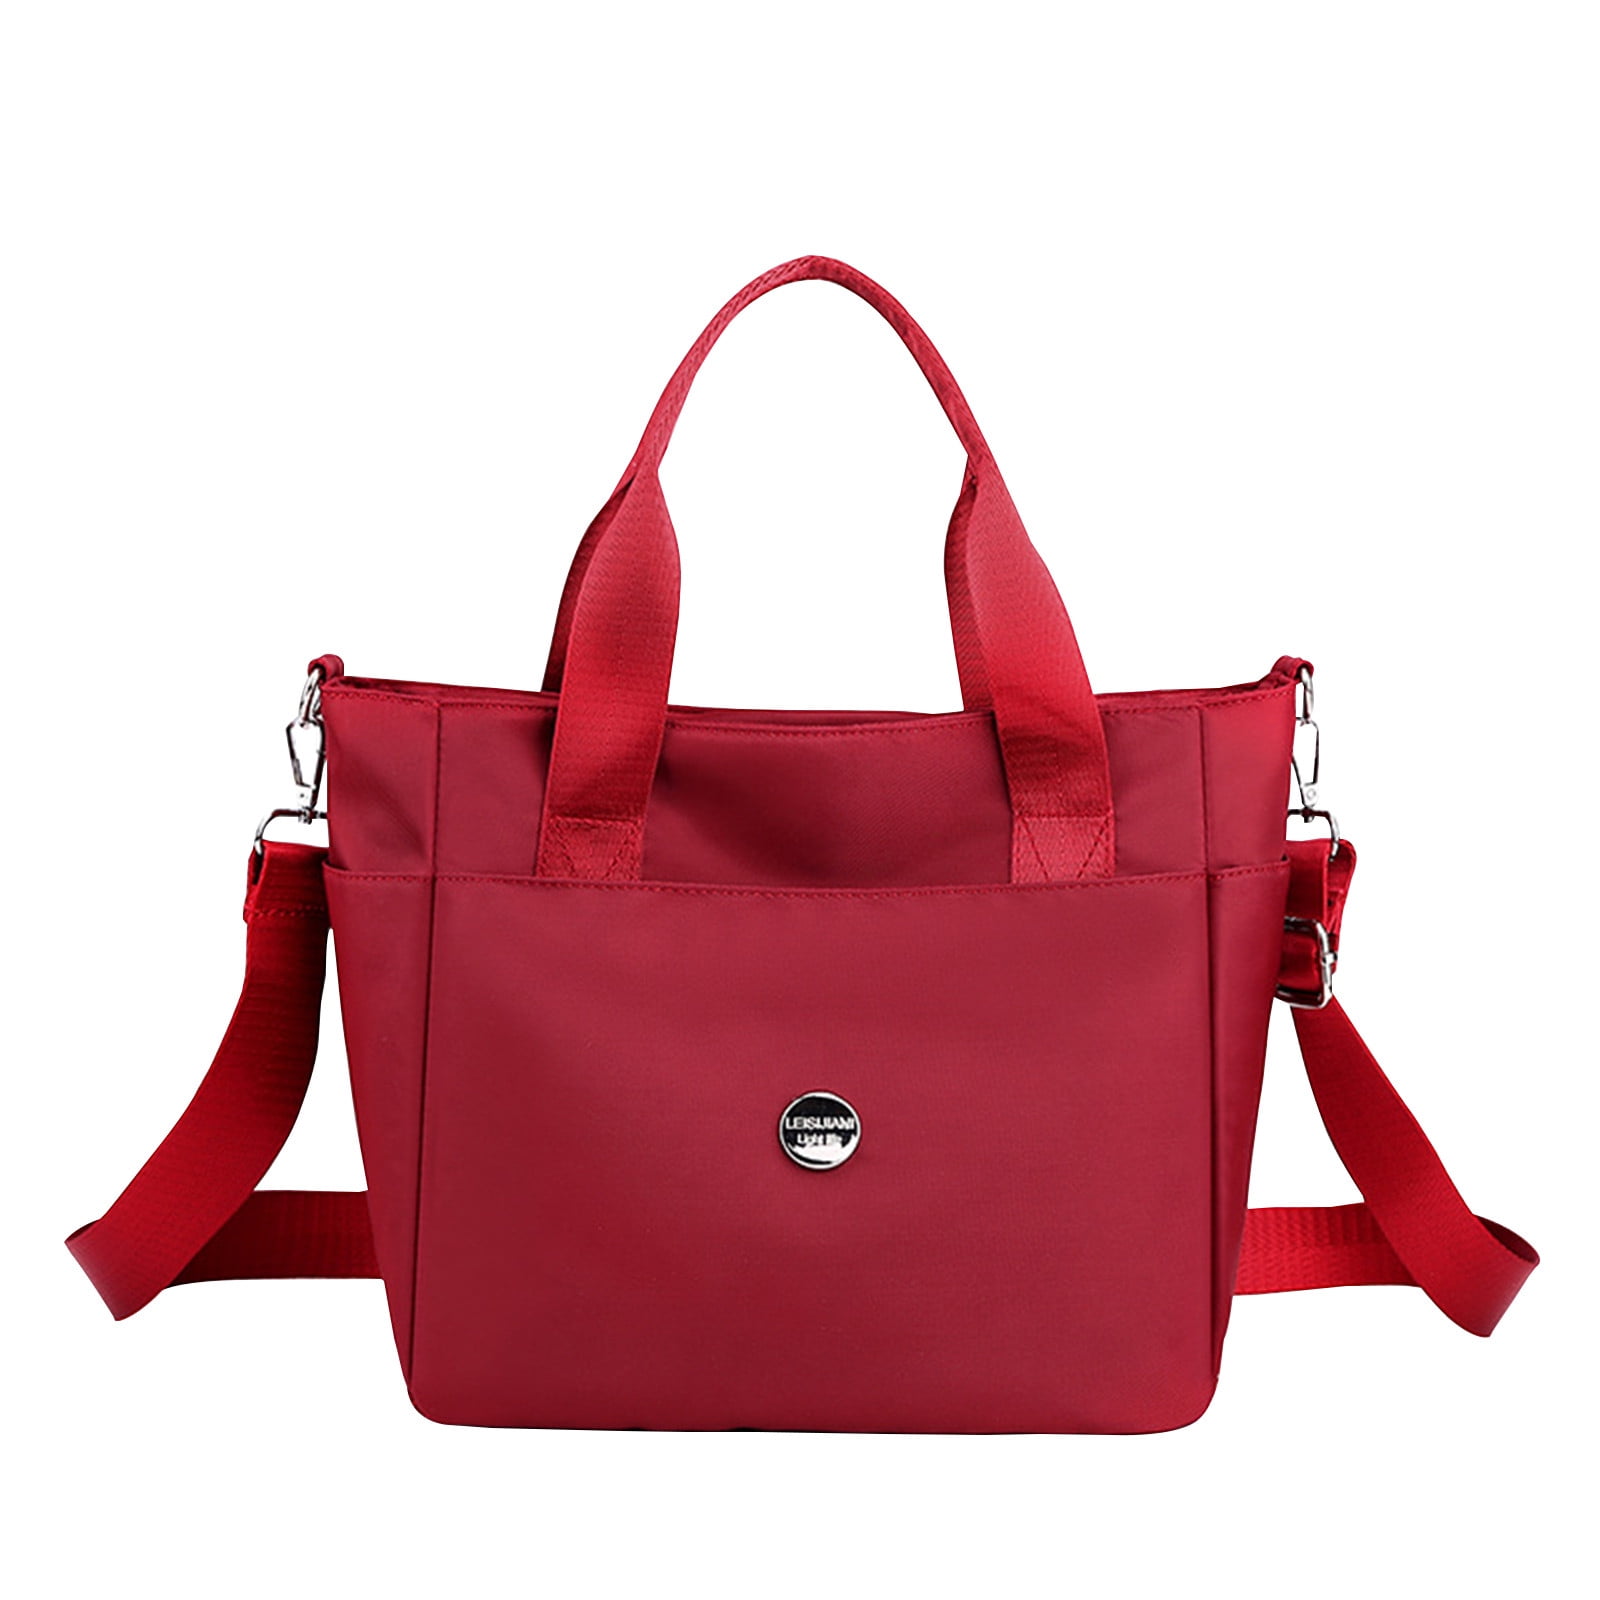 Leather Handbag, Leather Purse, Top Handle Bag, Brown - Etsy